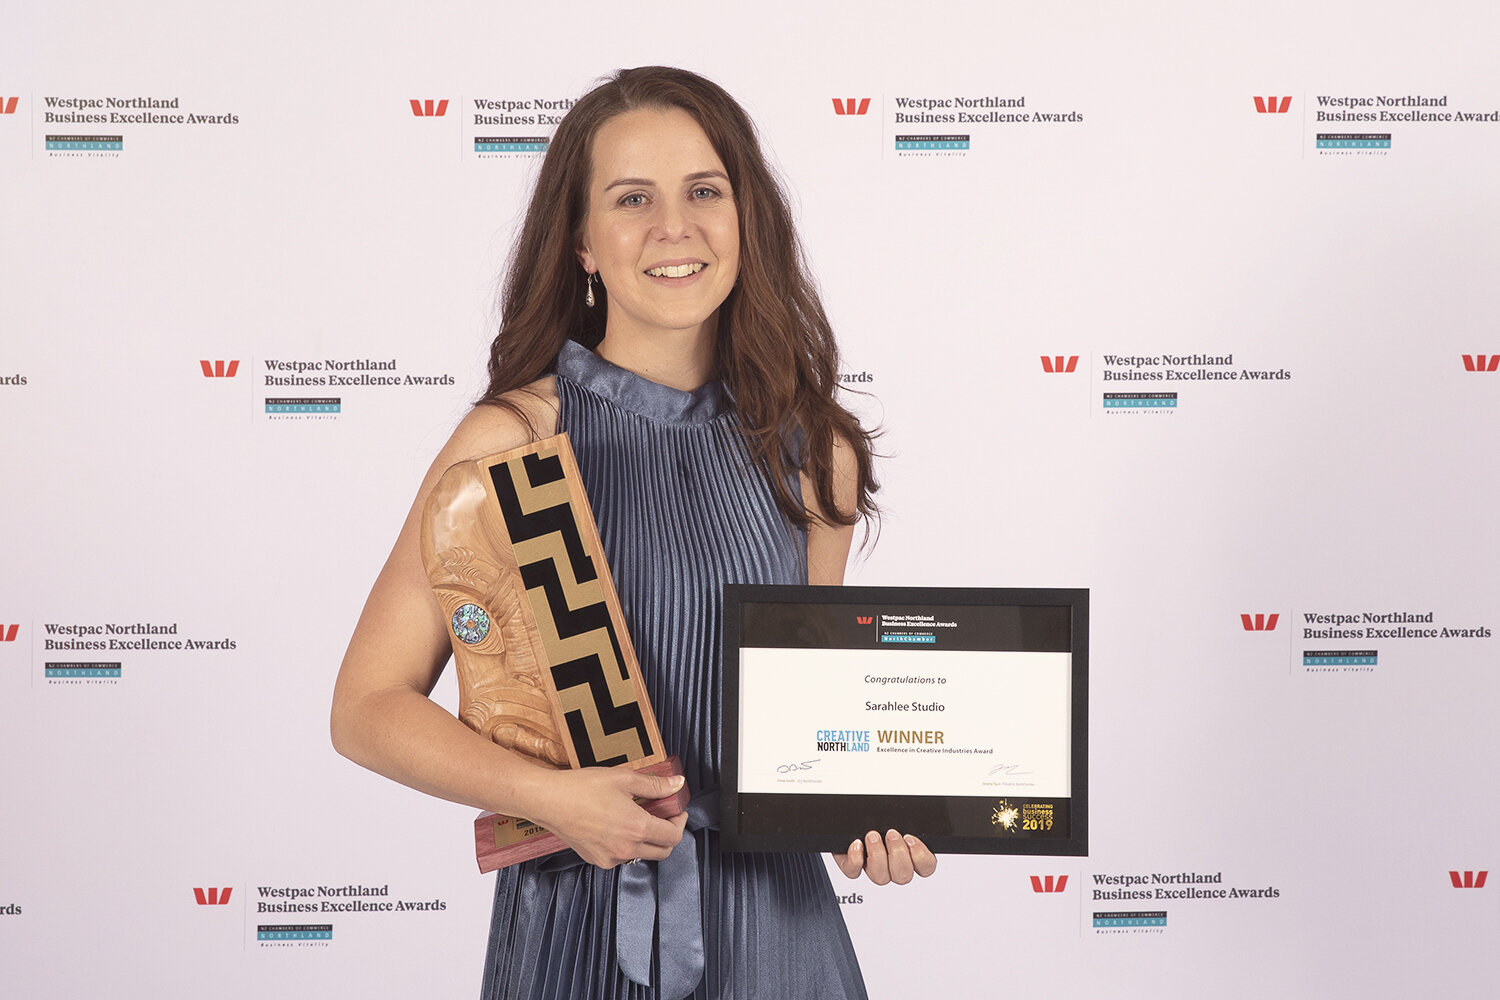 Winner - Sarahlee Studio westpac northland business excellence in creative industries award 2019